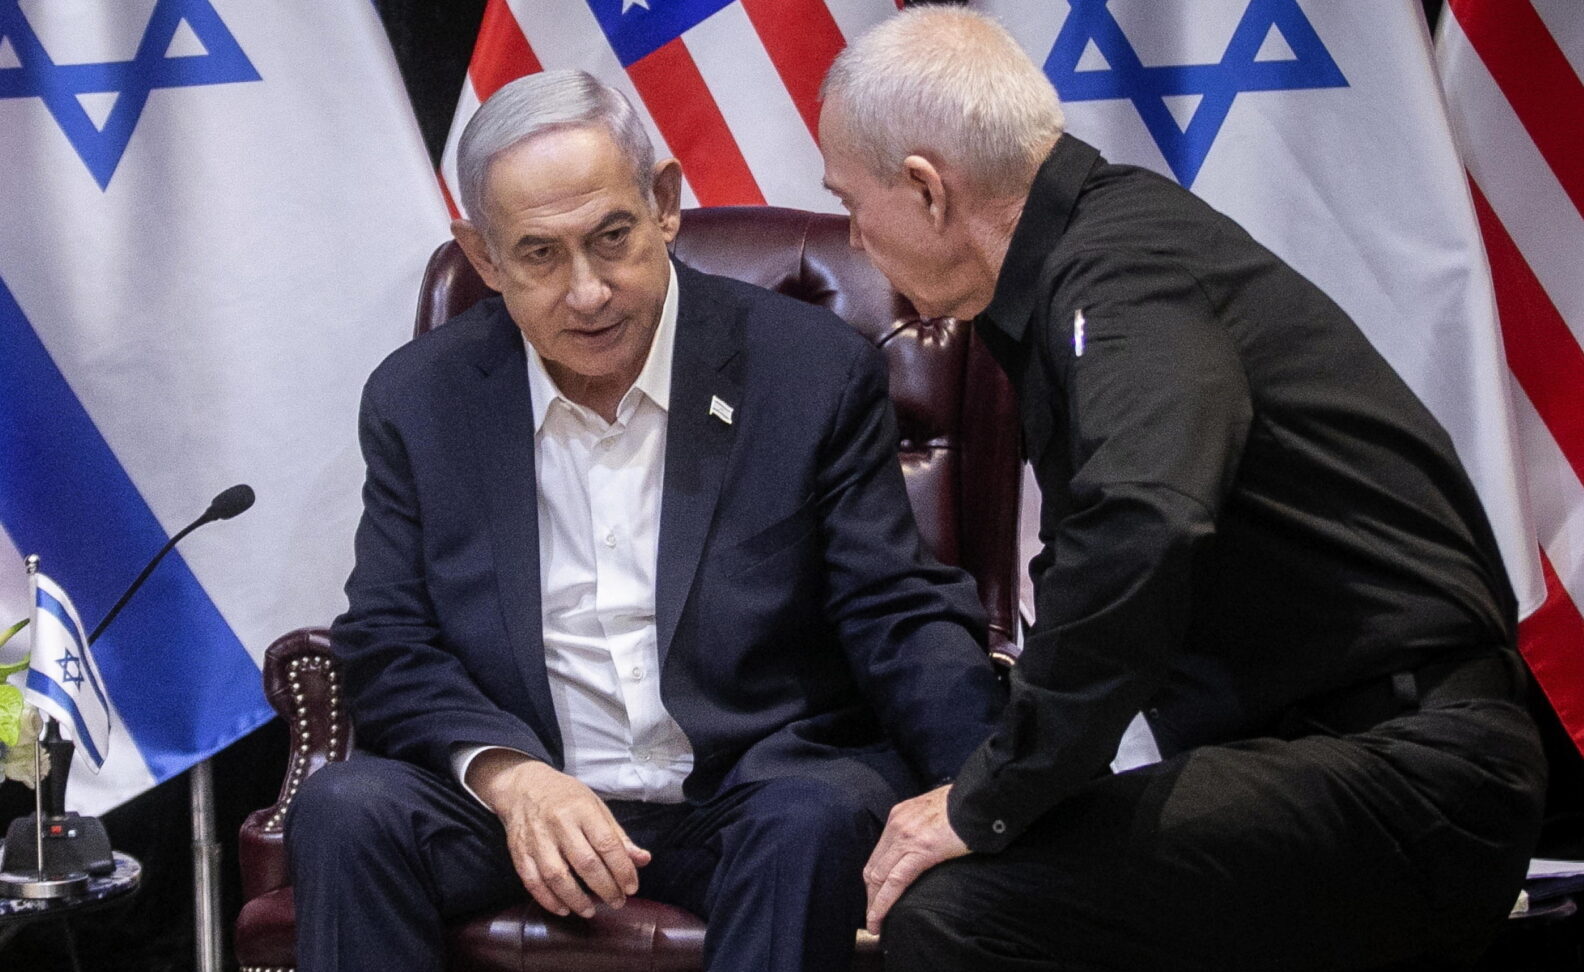 A Rafah partono gli ennesimi schiaffi di Netanyahu alle preoccupazioni di Biden